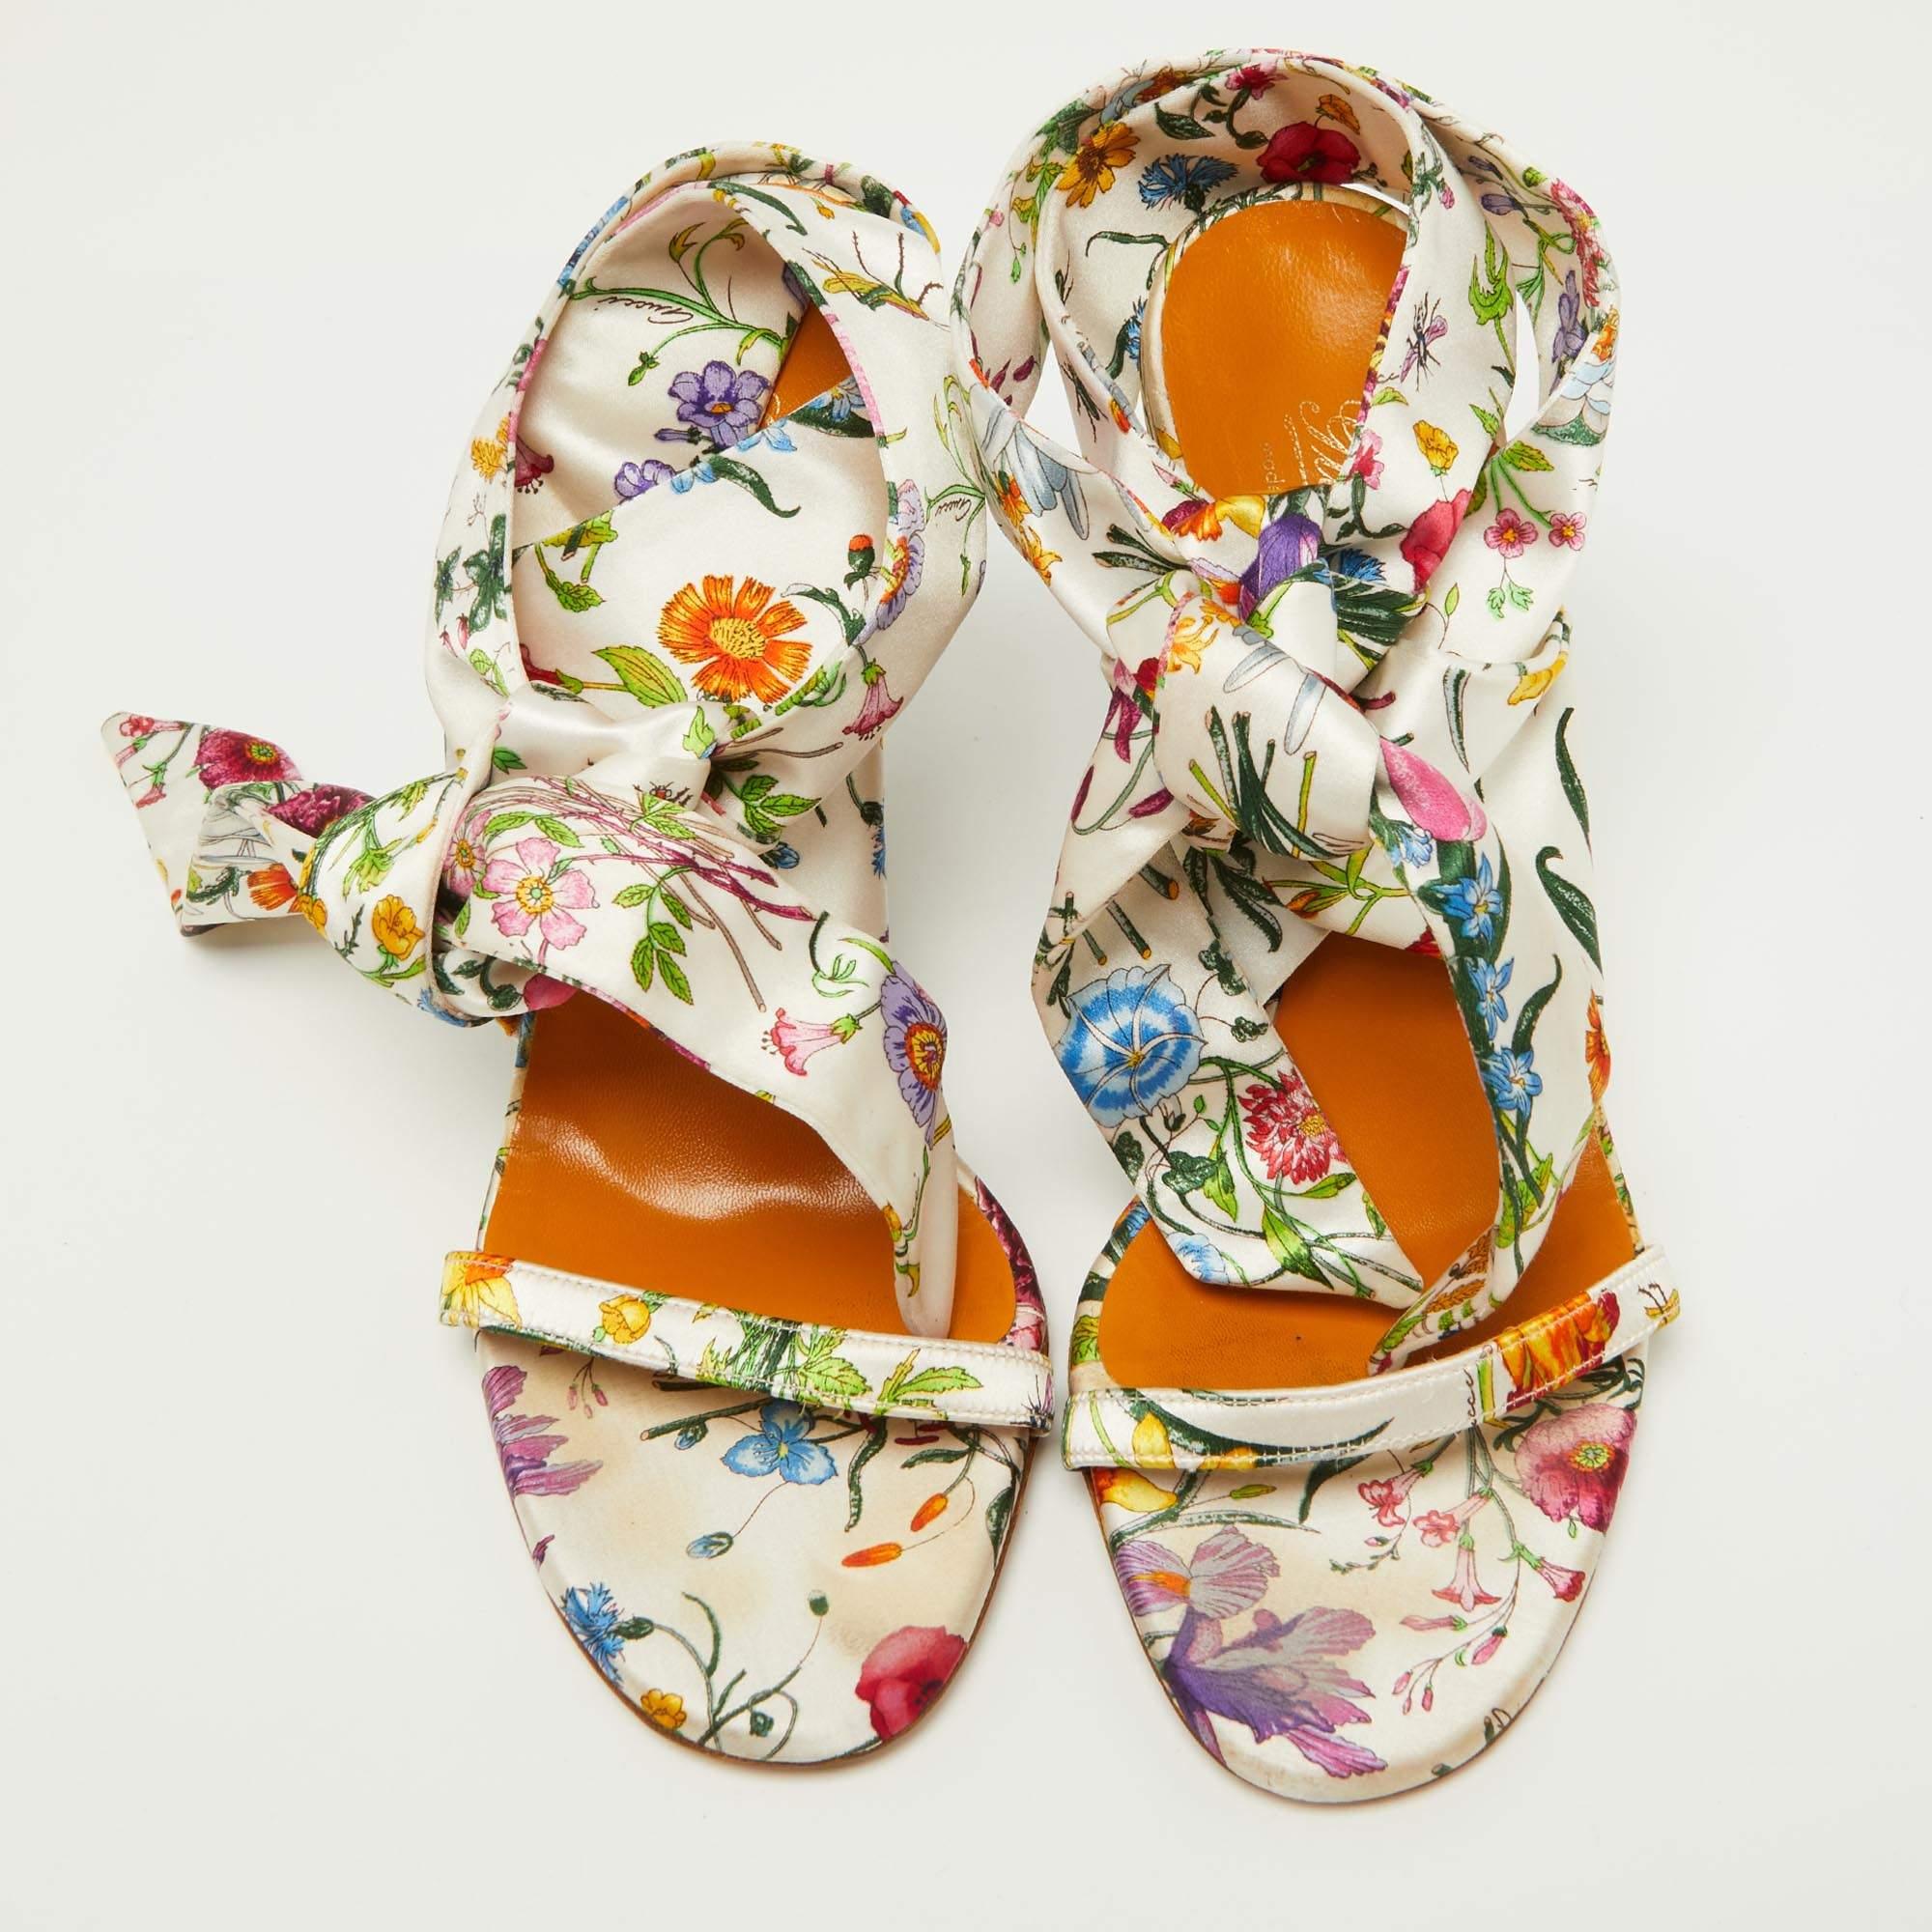 Gucci Floral Printed Satin Ankle Strap Wedge Sandals Size 38.5 In Fair Condition For Sale In Dubai, Al Qouz 2